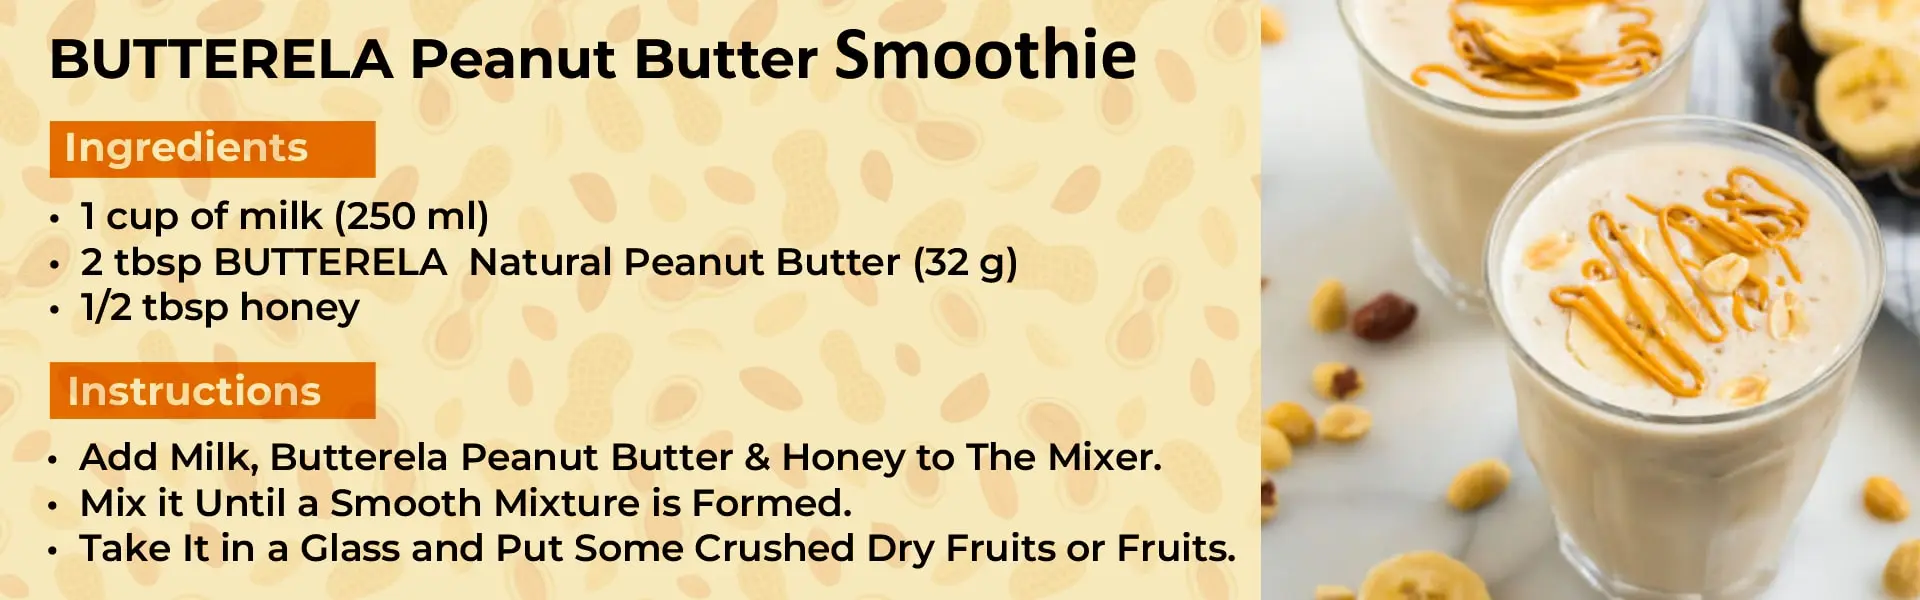 butterela-peanut-butter-smoothie-recipe